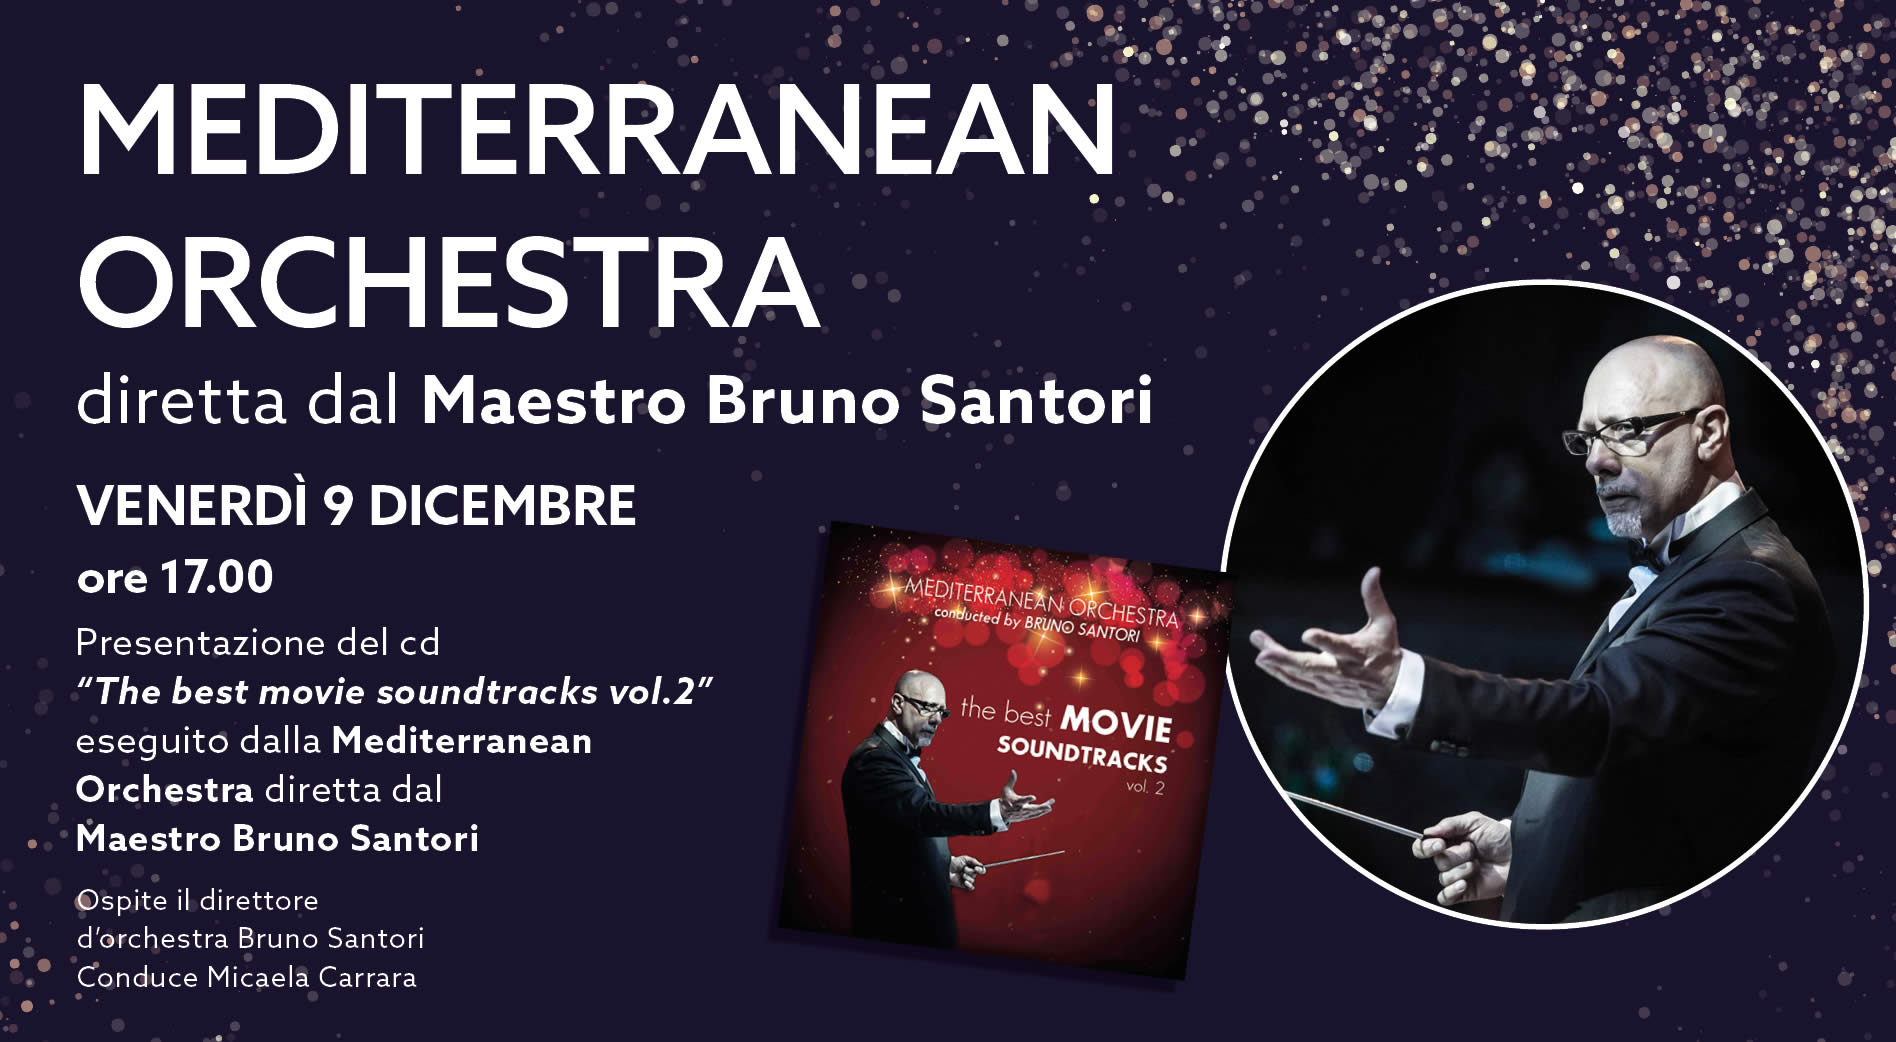 Maestro Bruno Santori